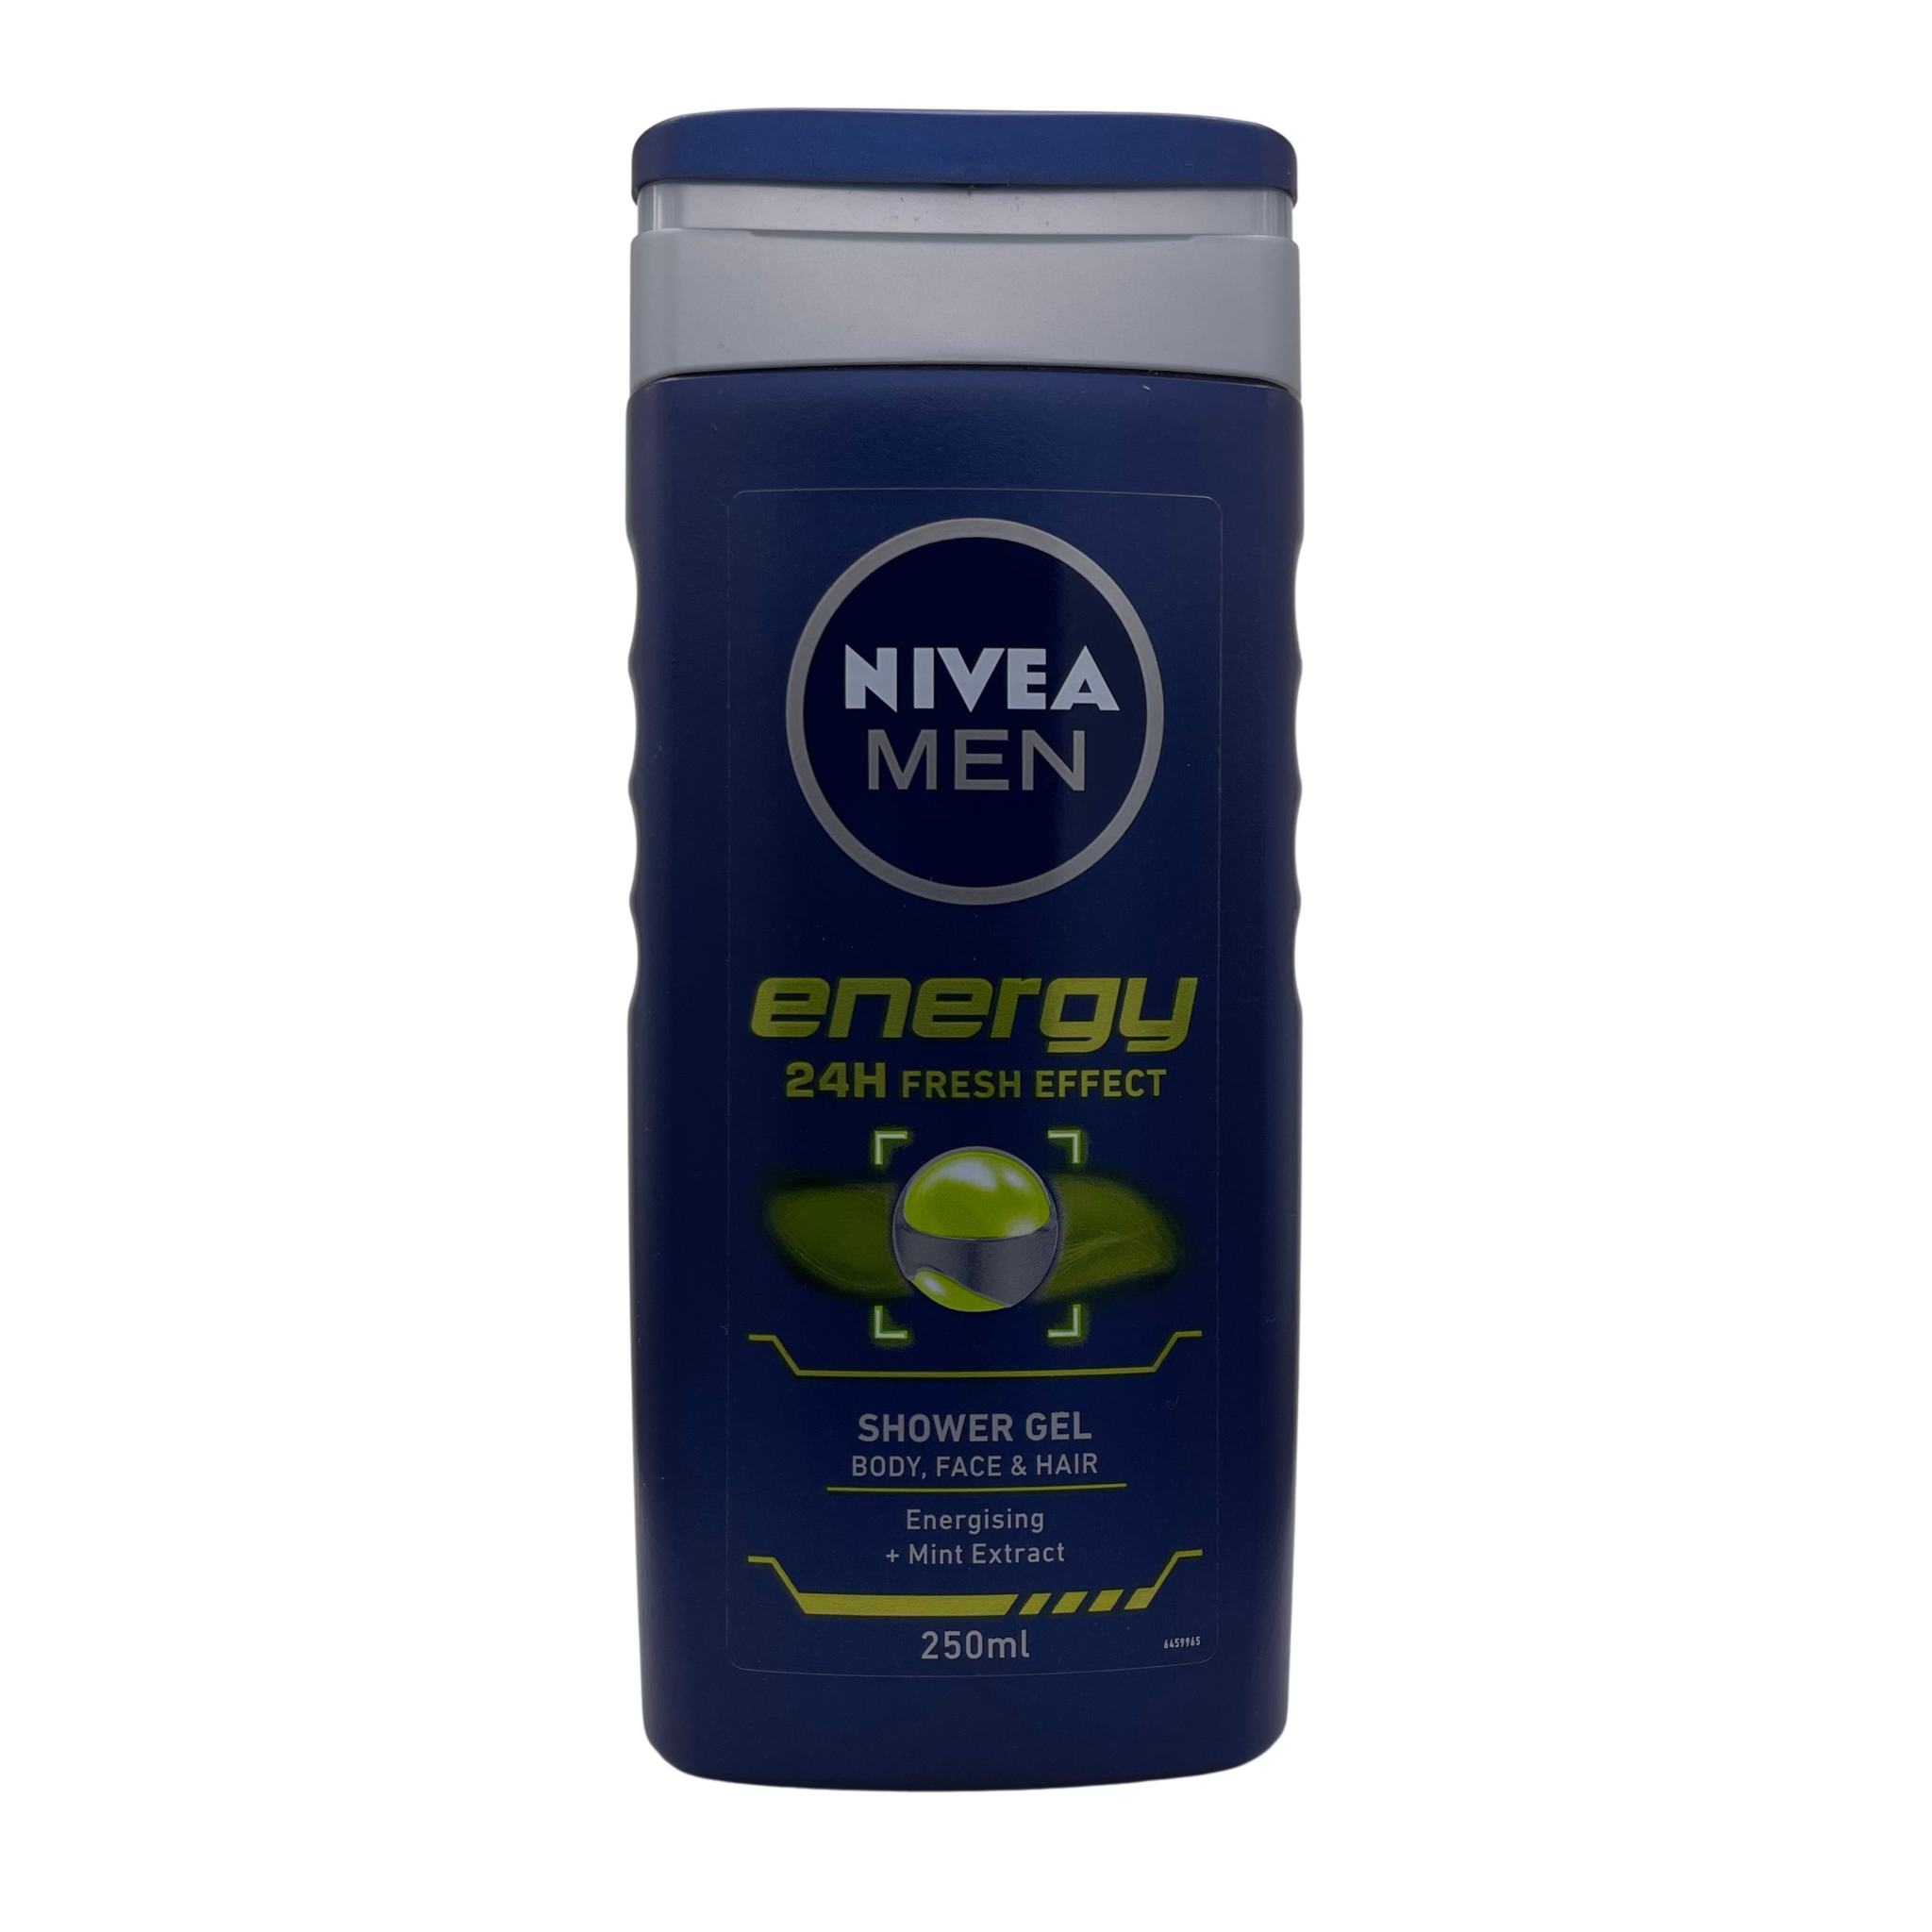 Nivea Men Energy showergel 250ml